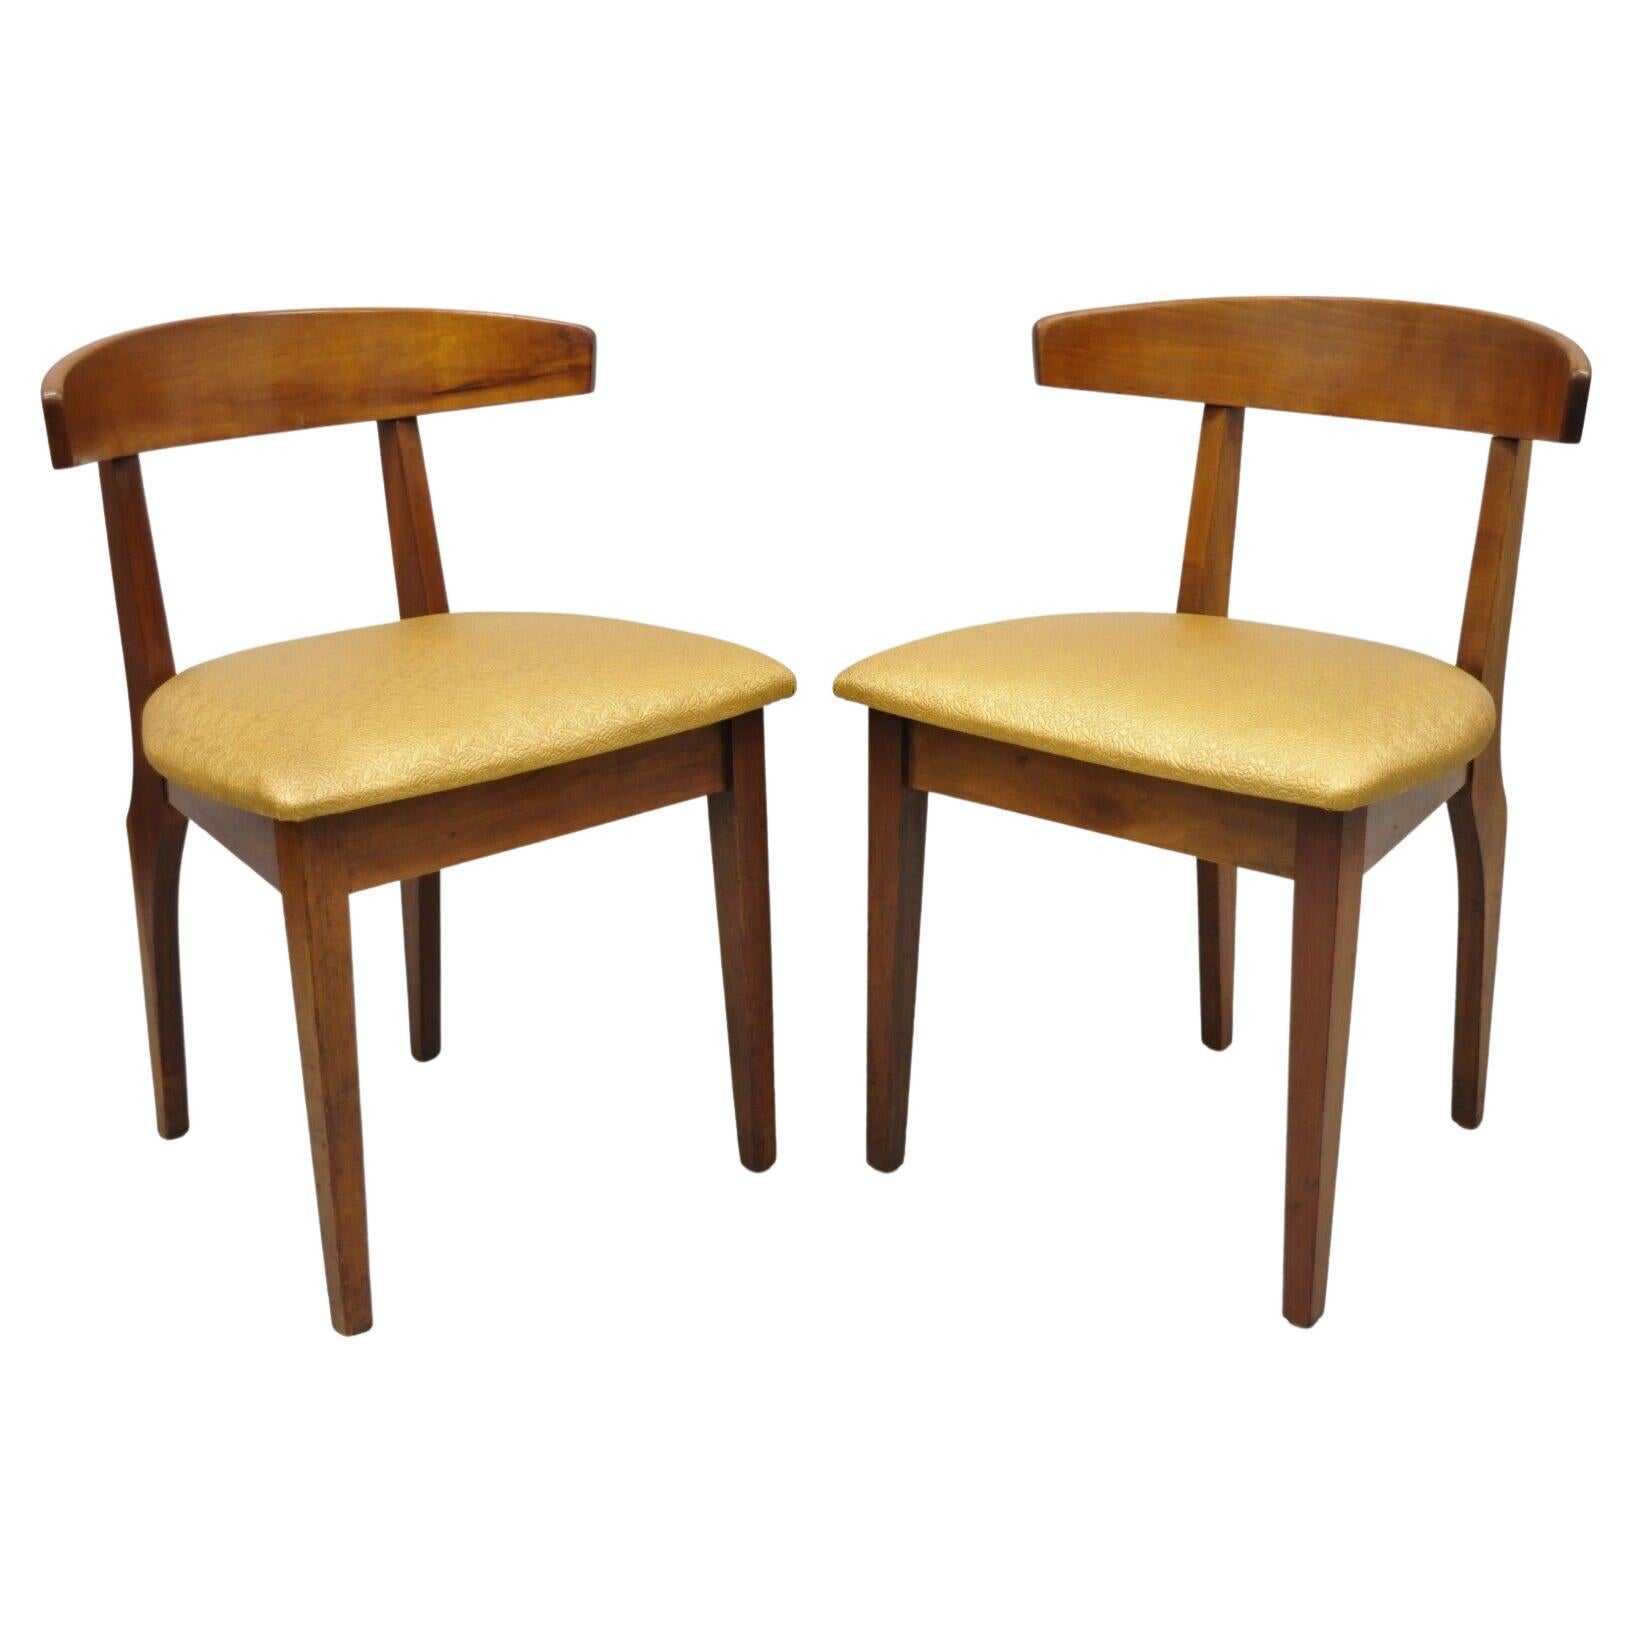 Mid-Century Modern Cherry Wood Curved Back Hoof Leg Side Chair, a Pair